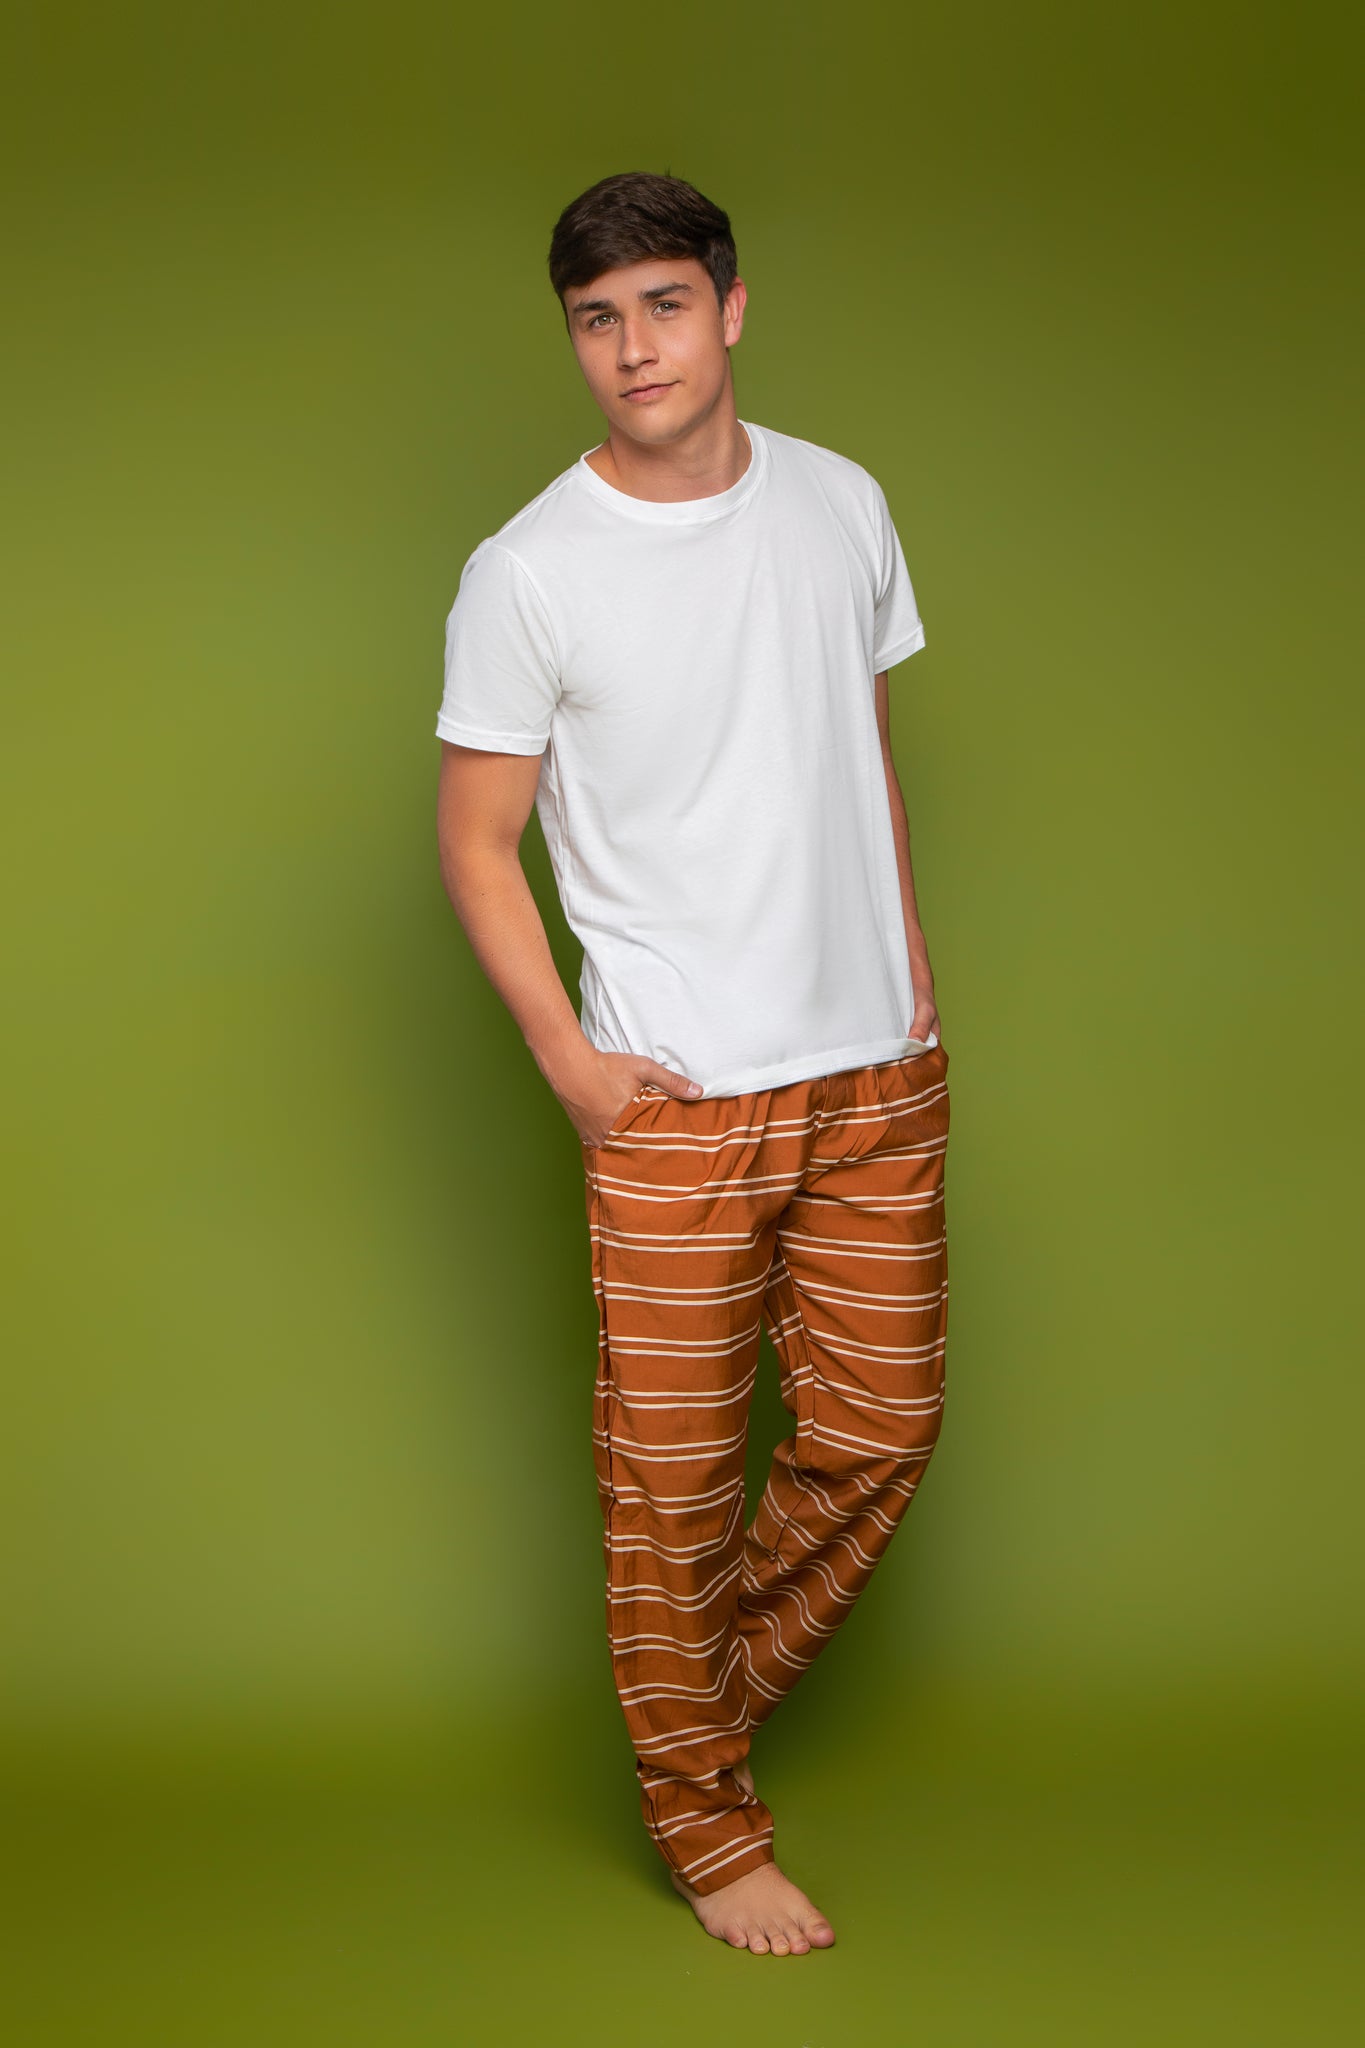 Pijama Hombre Pantalon Caqui